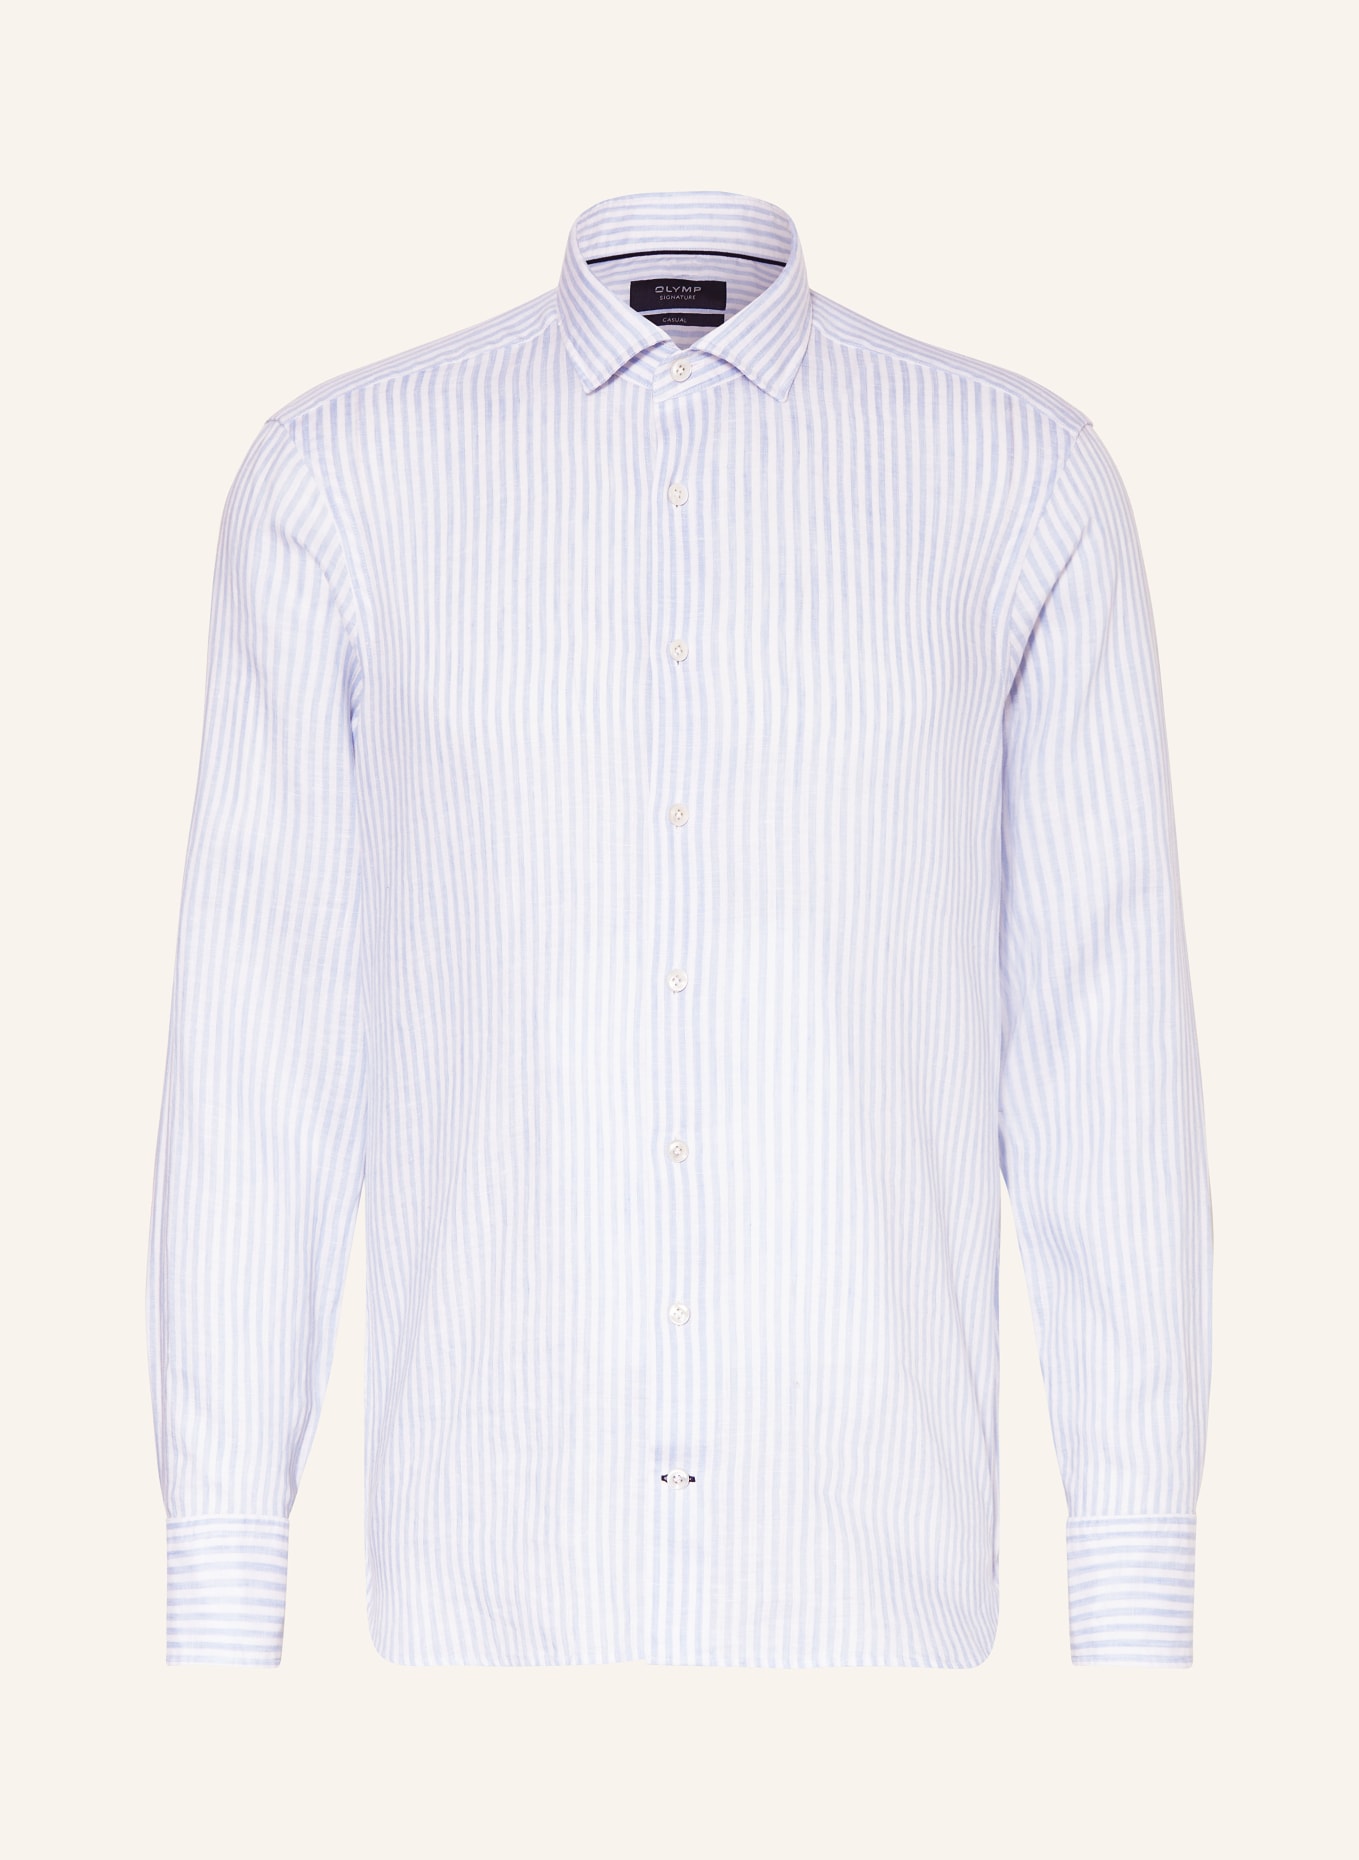 OLYMP SIGNATURE Hemd tailored Fit aus Leinen, Farbe: HELLBLAU/ WEISS (Bild 1)